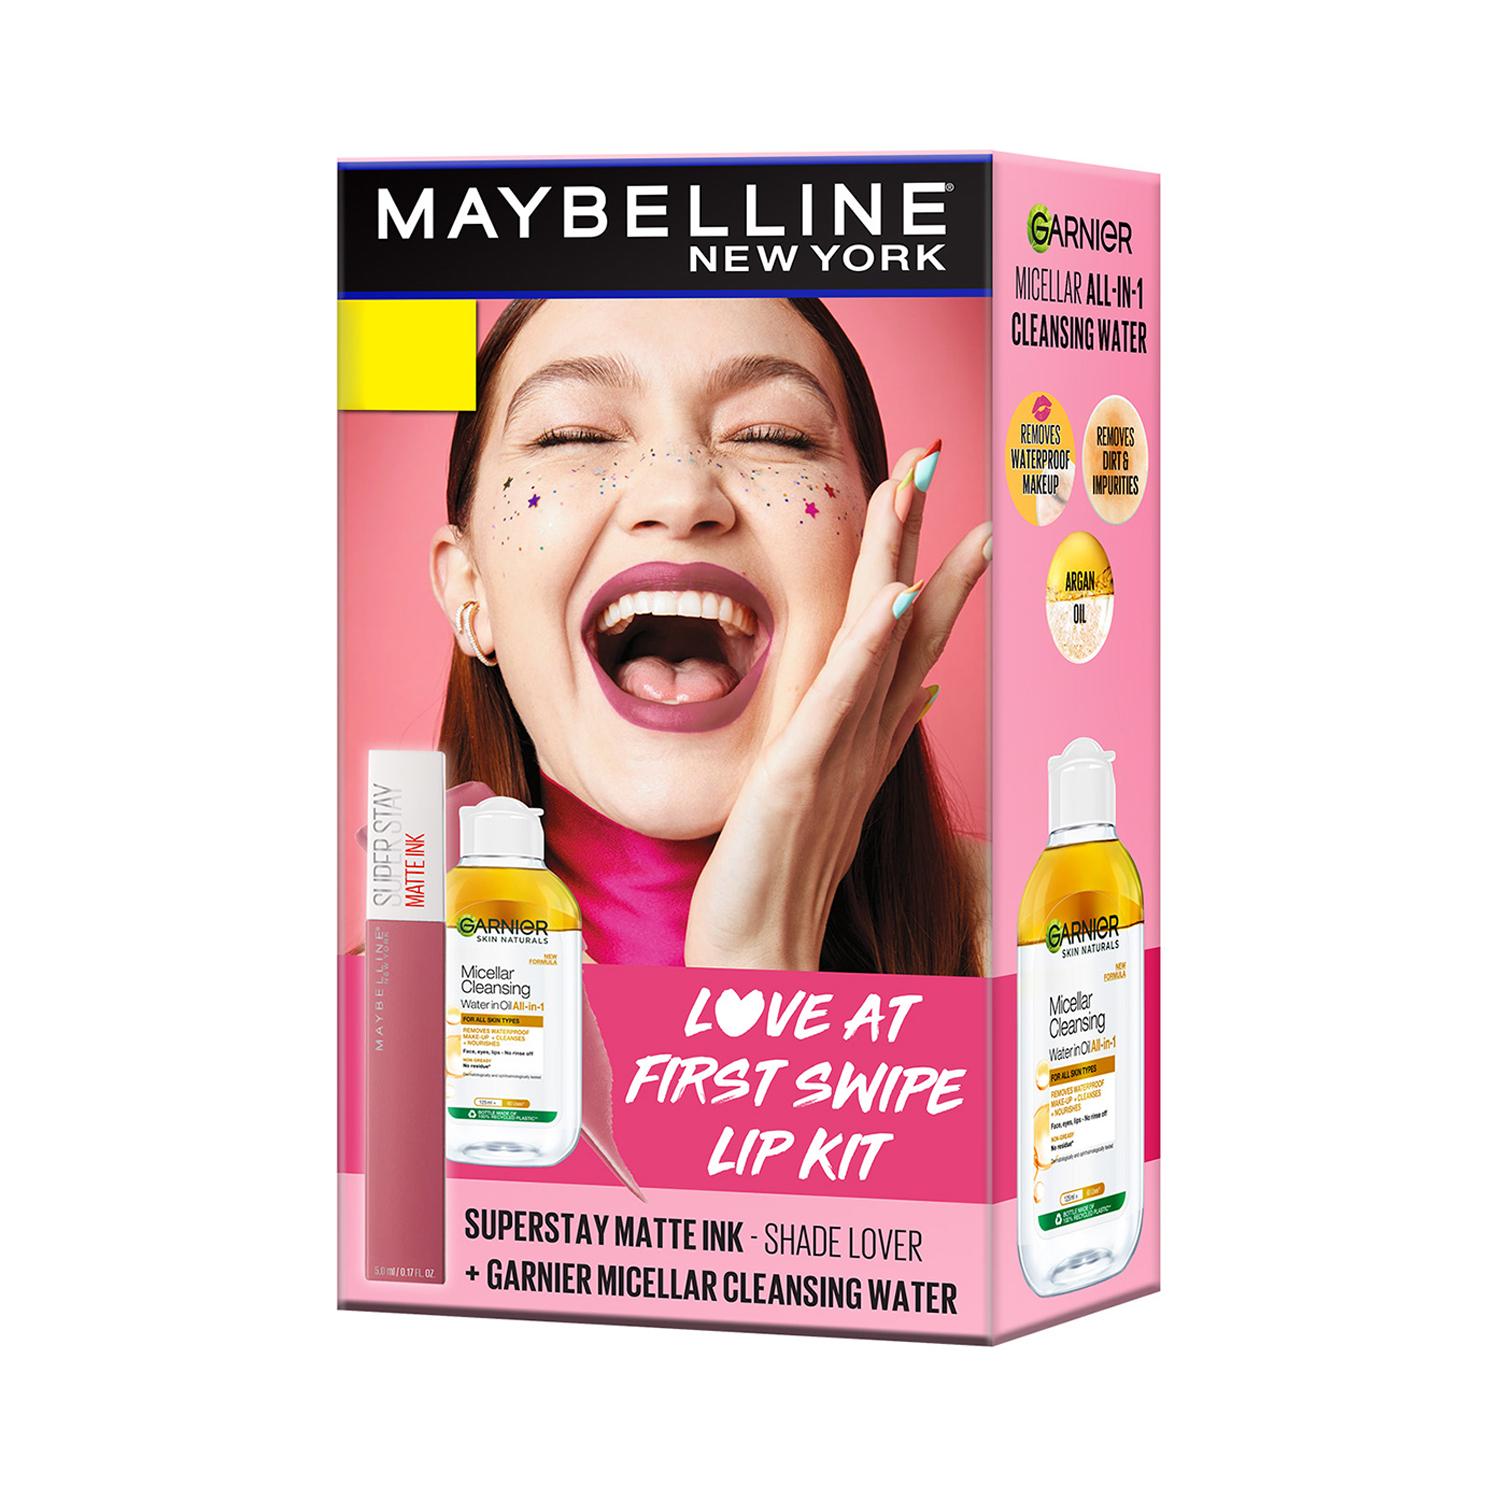 Maybelline New York | Maybelline Love at First Swipe Lip Kit - Superstay Matte Ink Lover+ Garnier Biphase Micellar, 130g